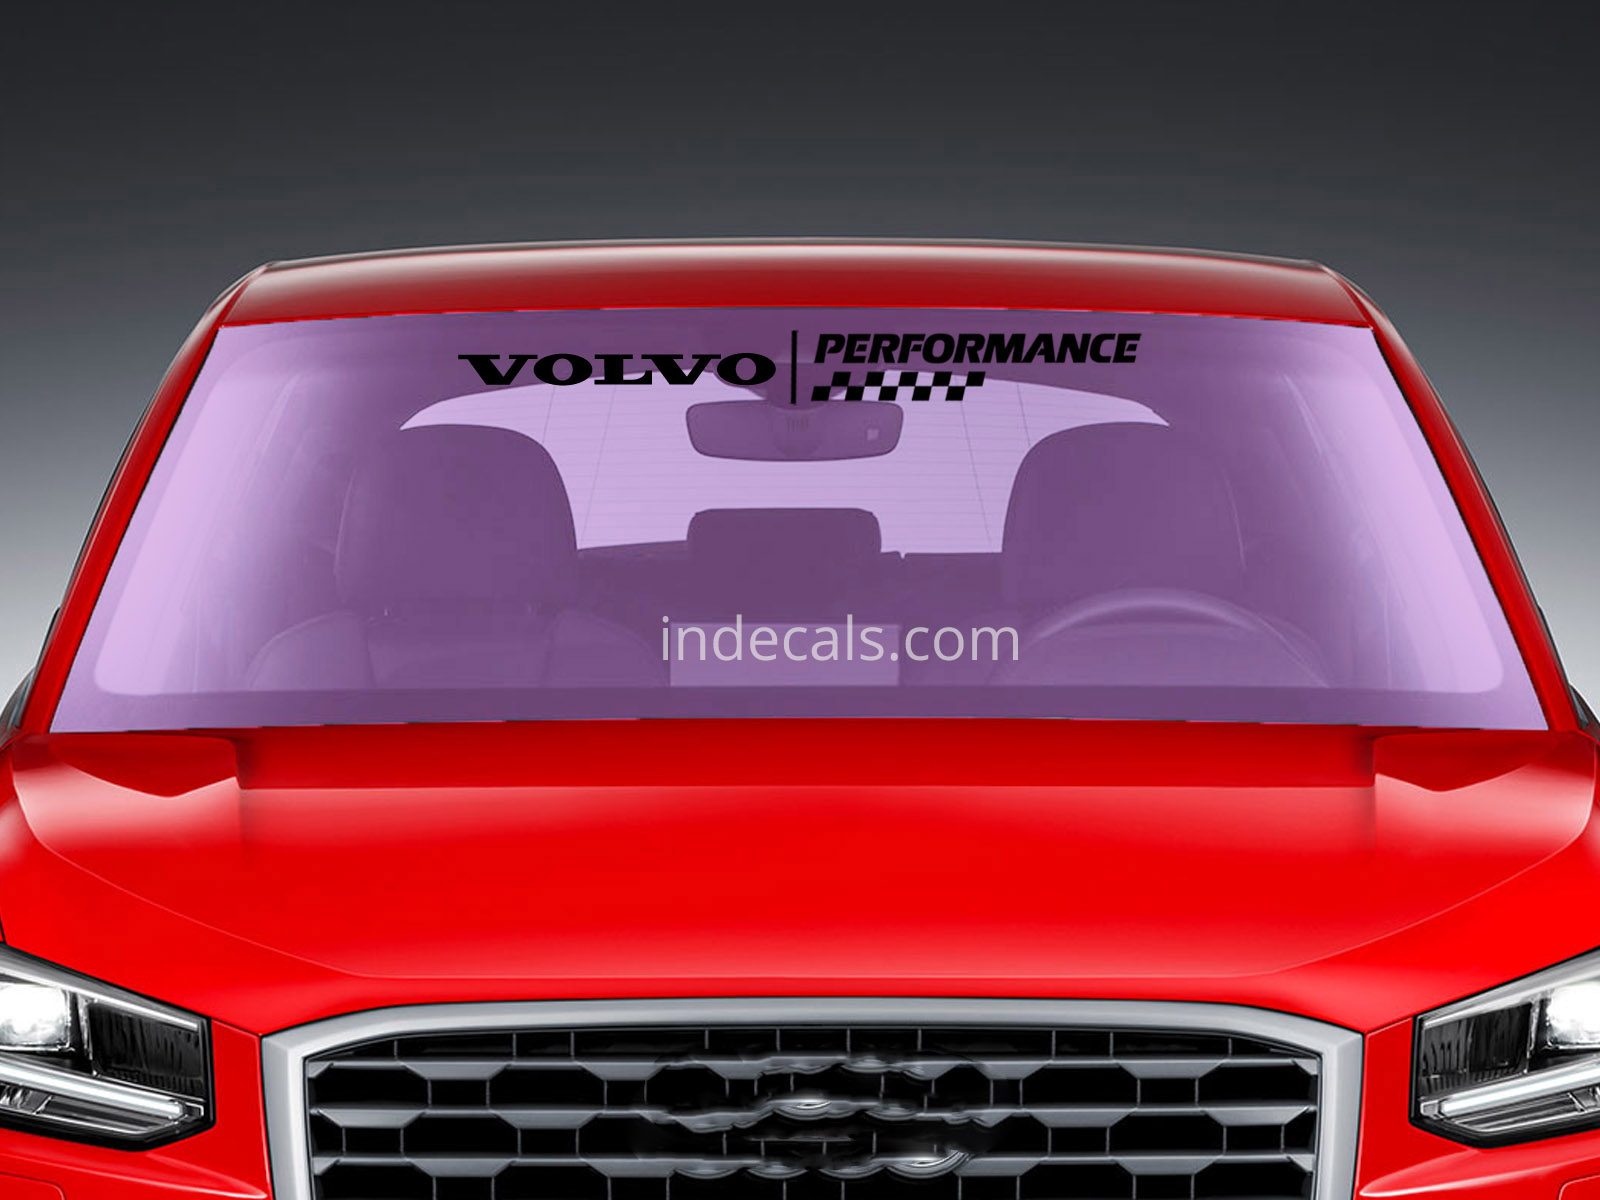 1 x Volvo Performance Sticker for Windshield or Back Window - Black